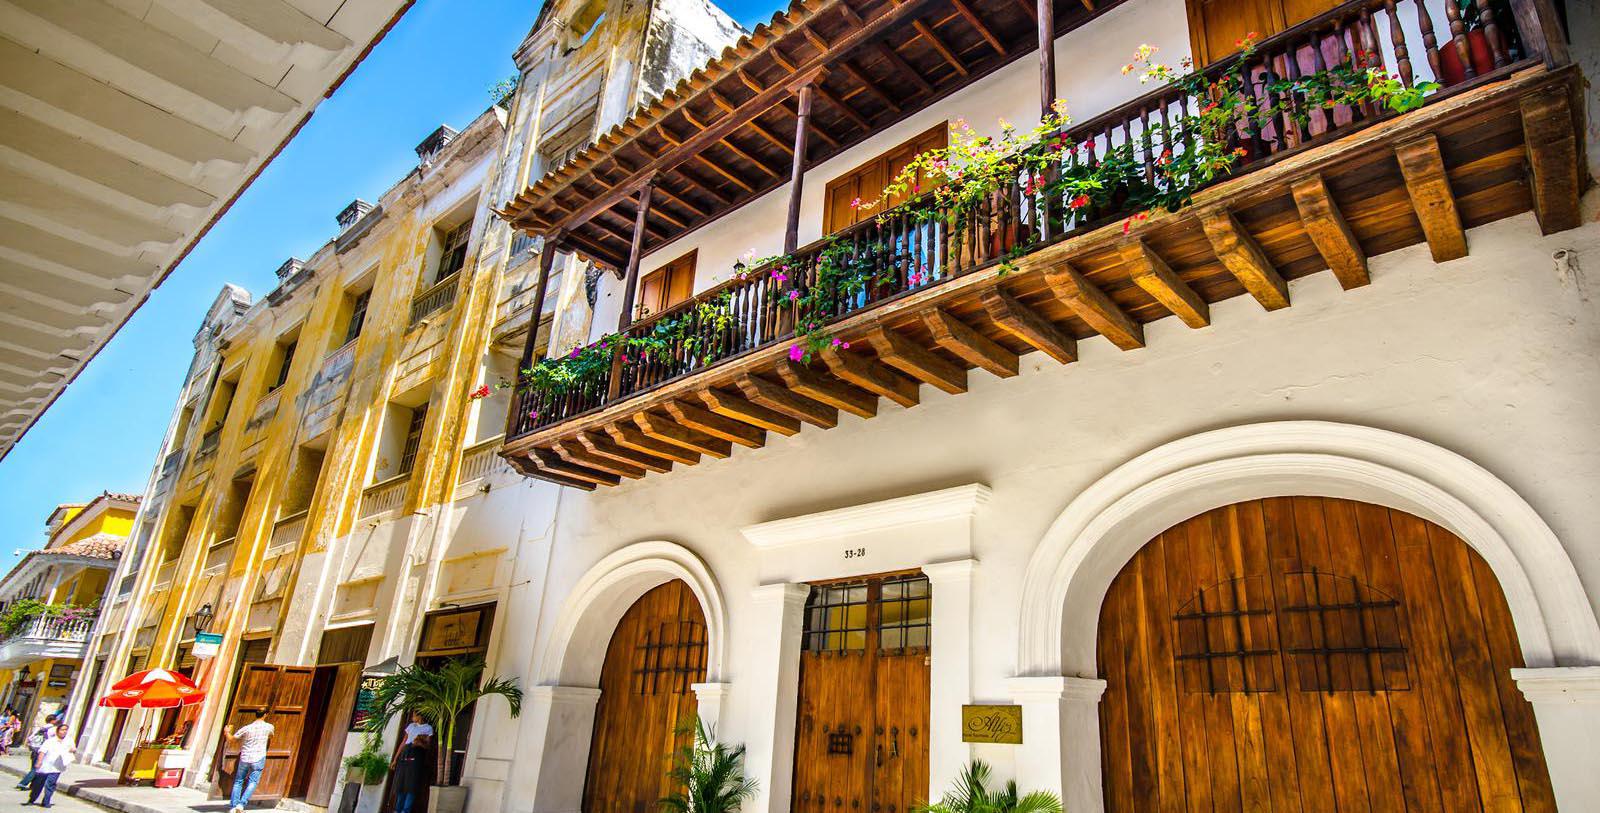 Image of hotel exterior Alfiz Hotel, 1700, Member of Historic Hotels Worldwide, in Cartagena de Indias, Colombia, Overview